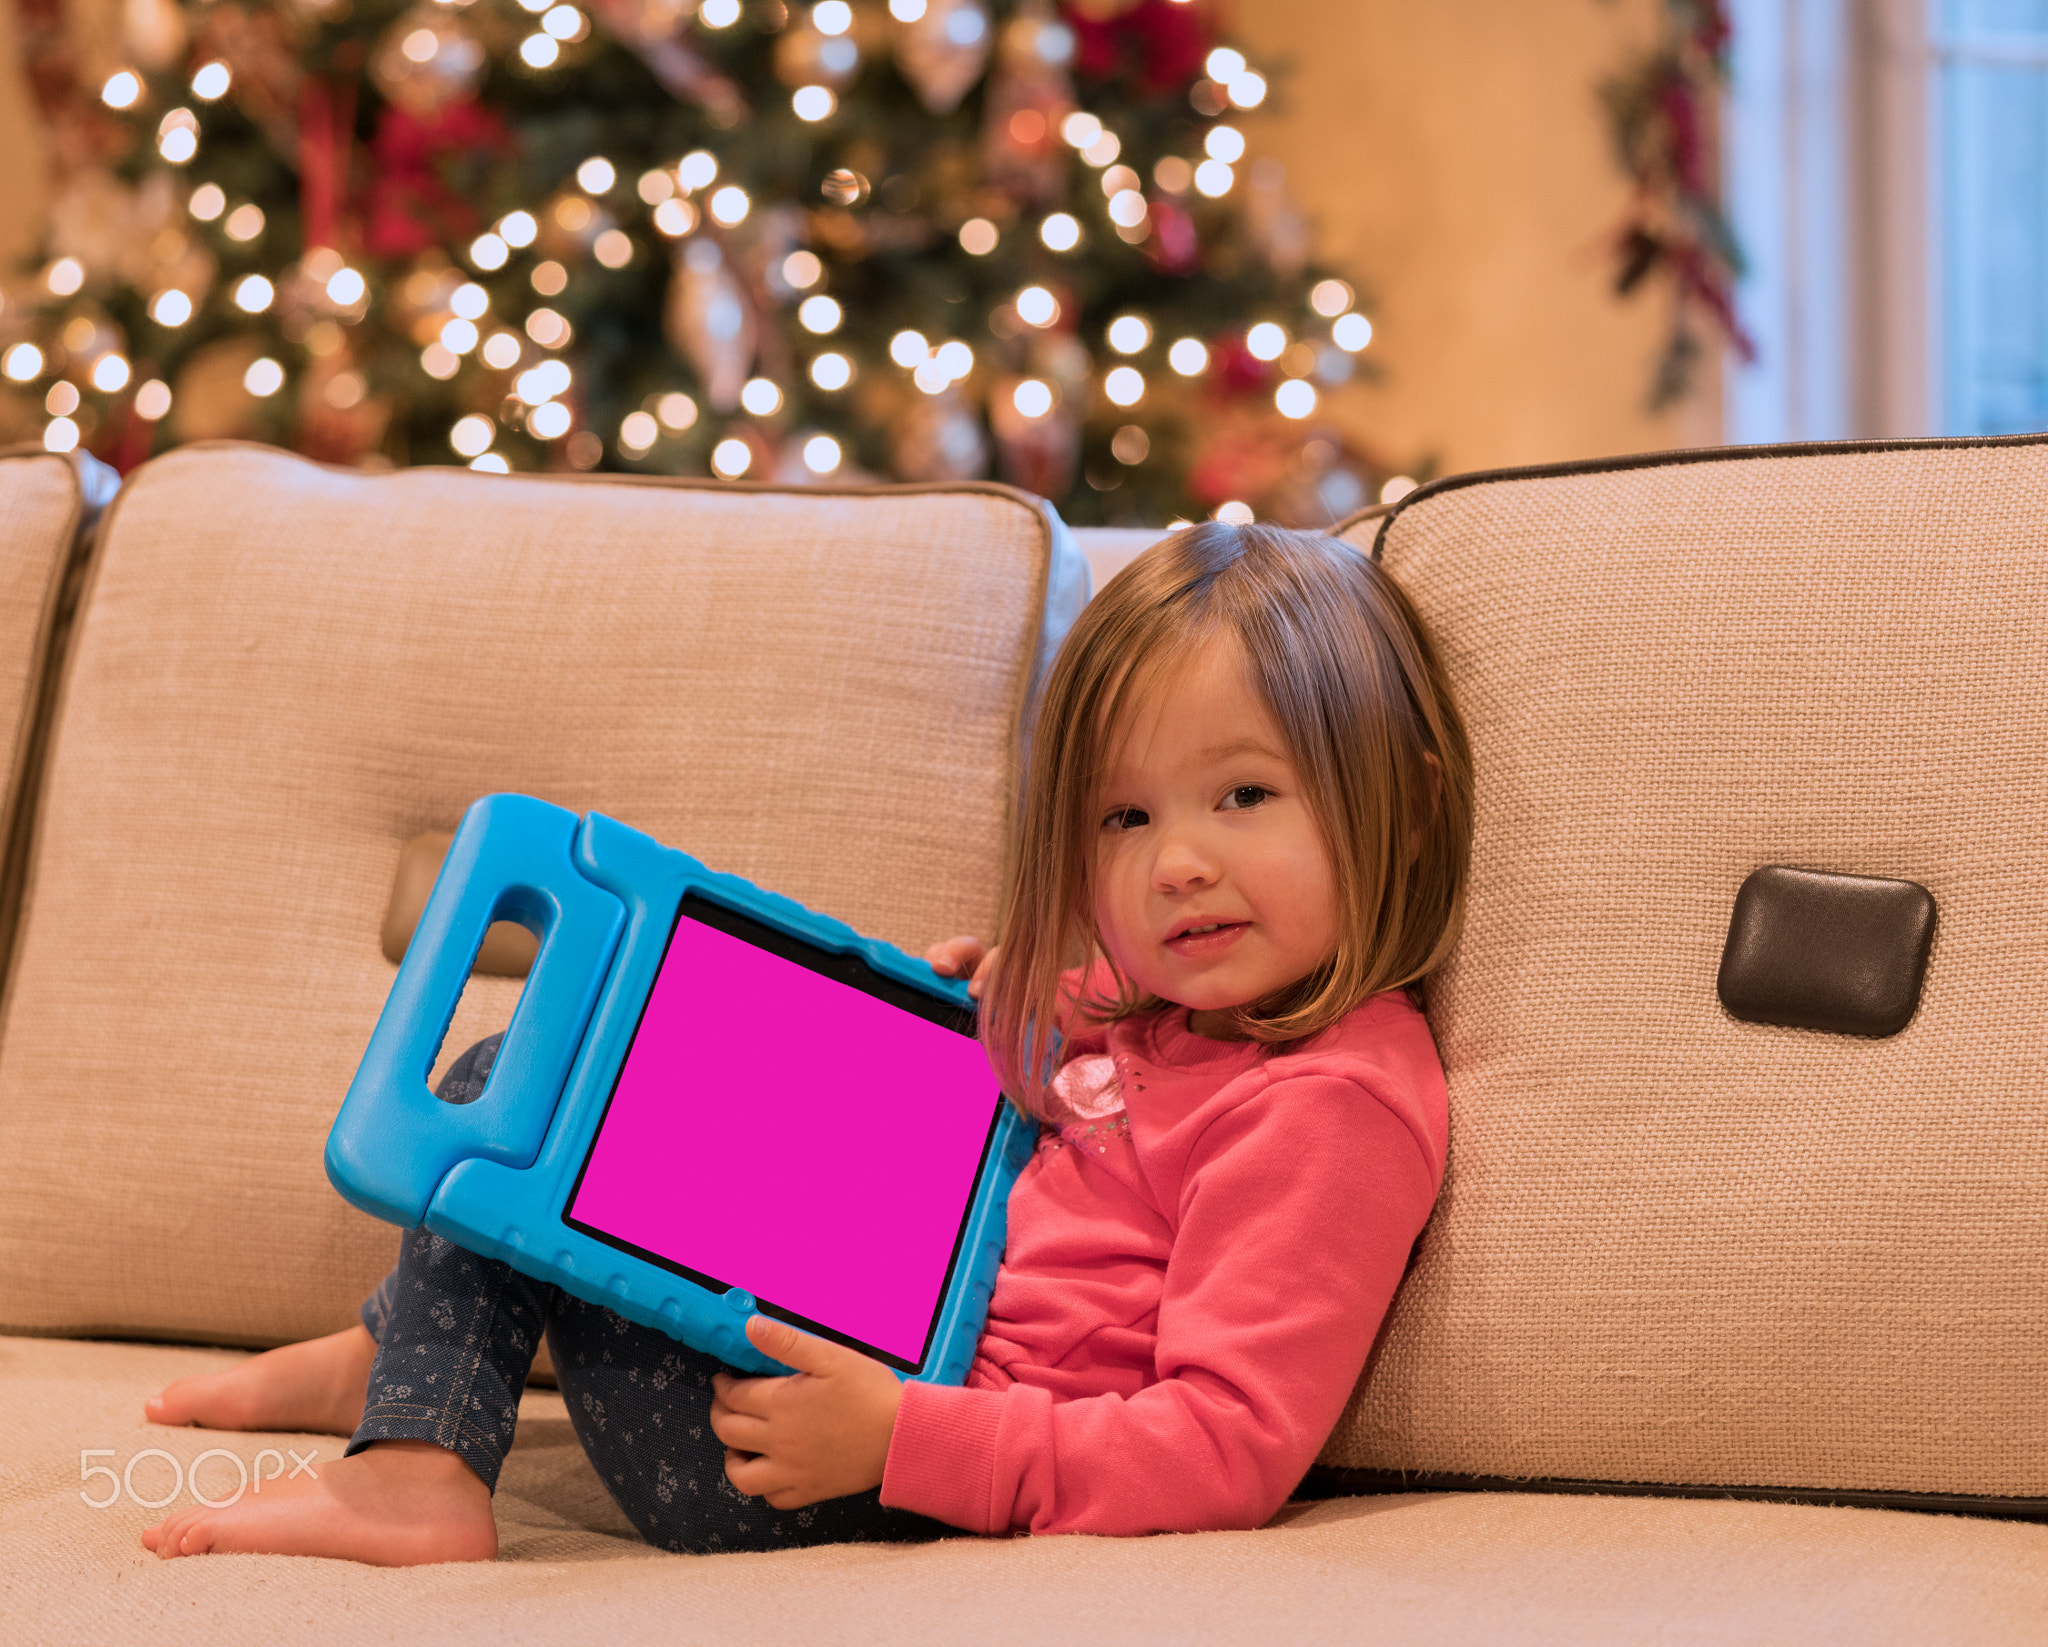 Preschool girl using a tablet computer at home at Christmas